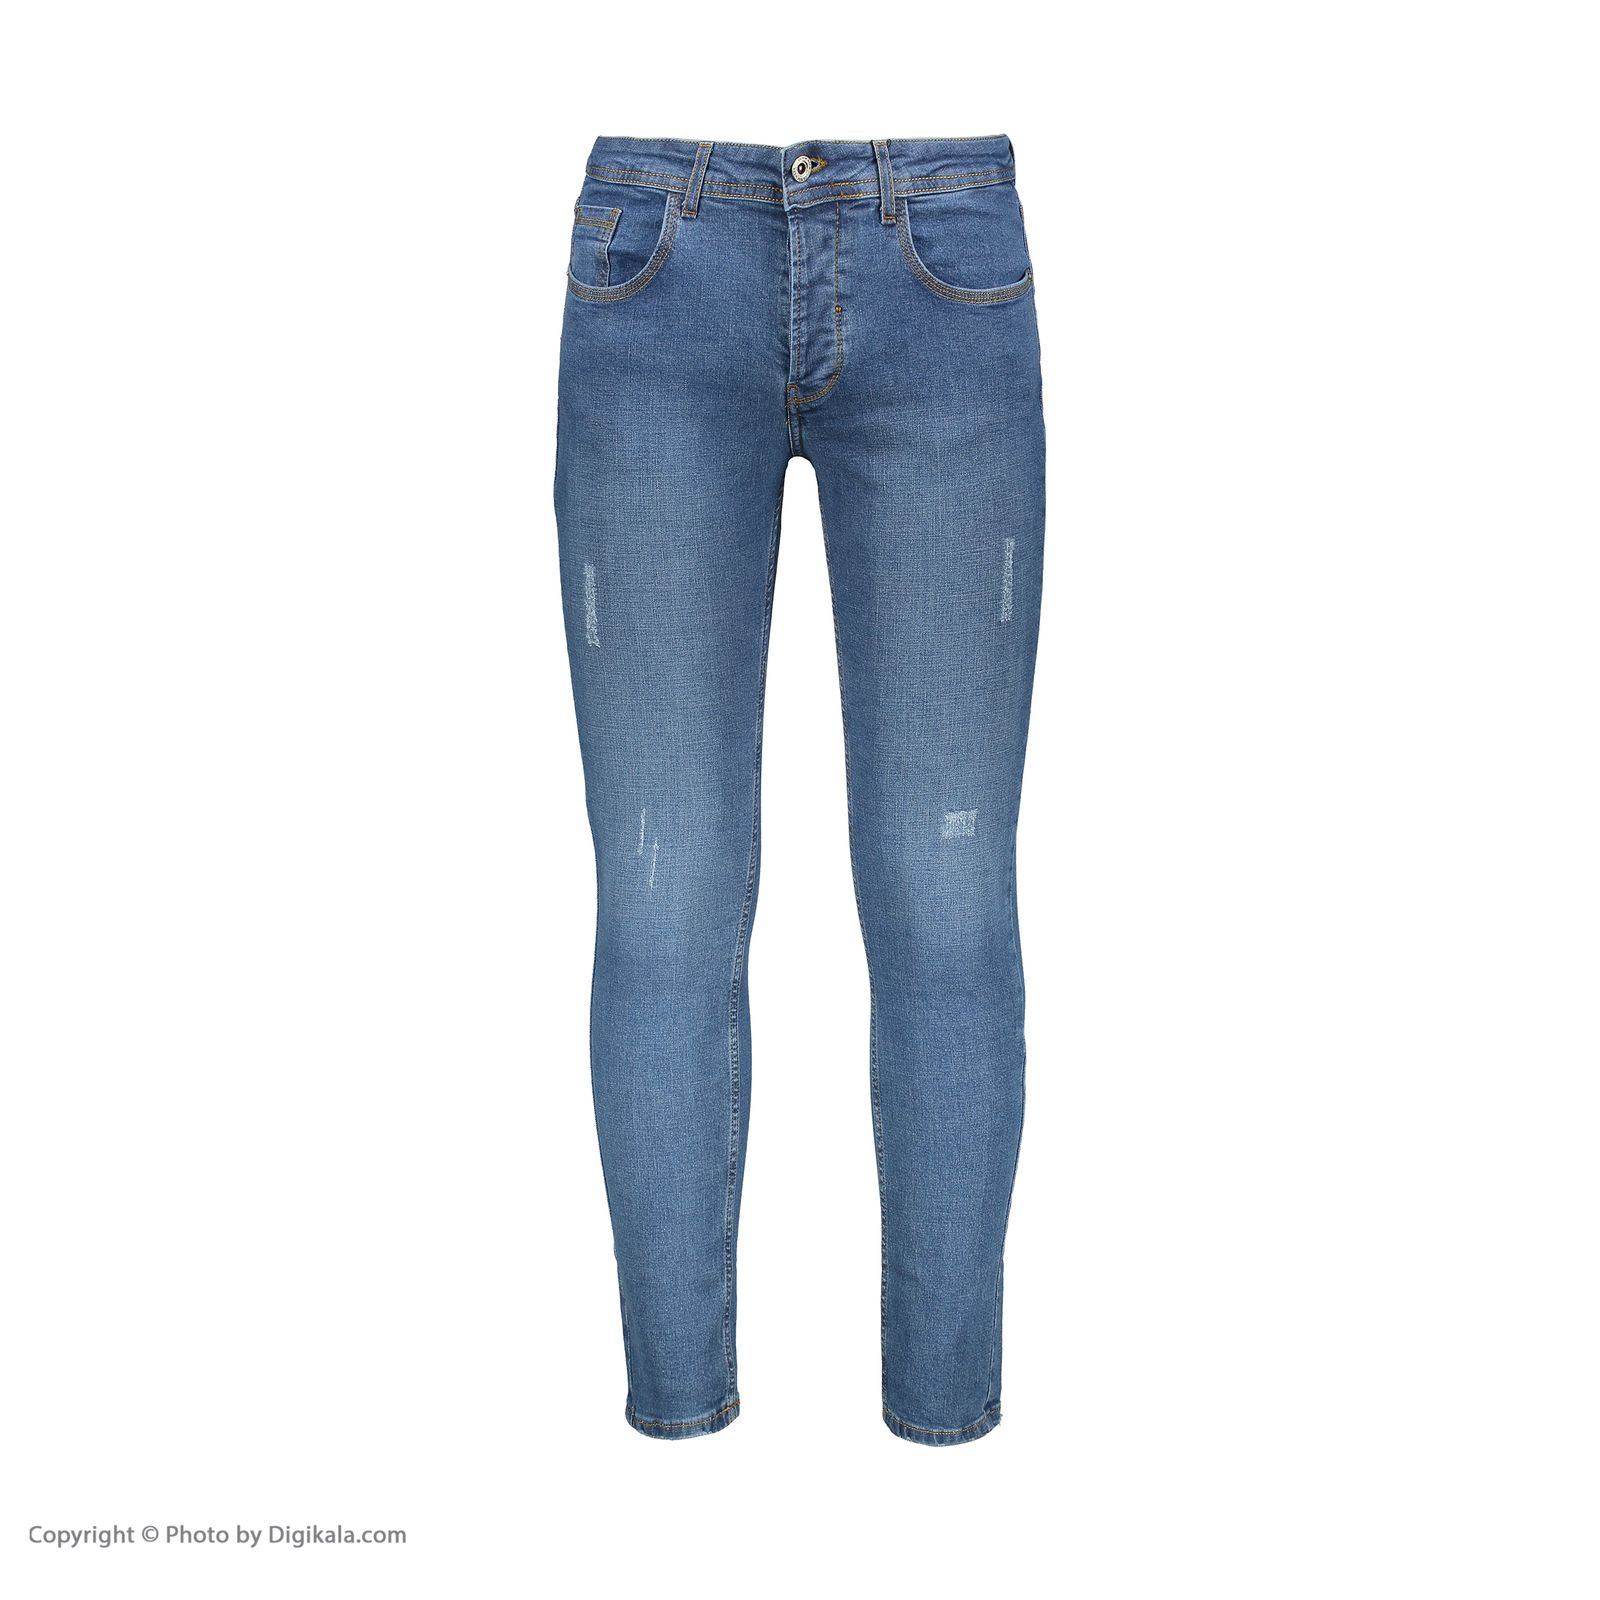 شلوار جین مردانه آر ان اس مدل 1133024-50 - آبی روشن - 3